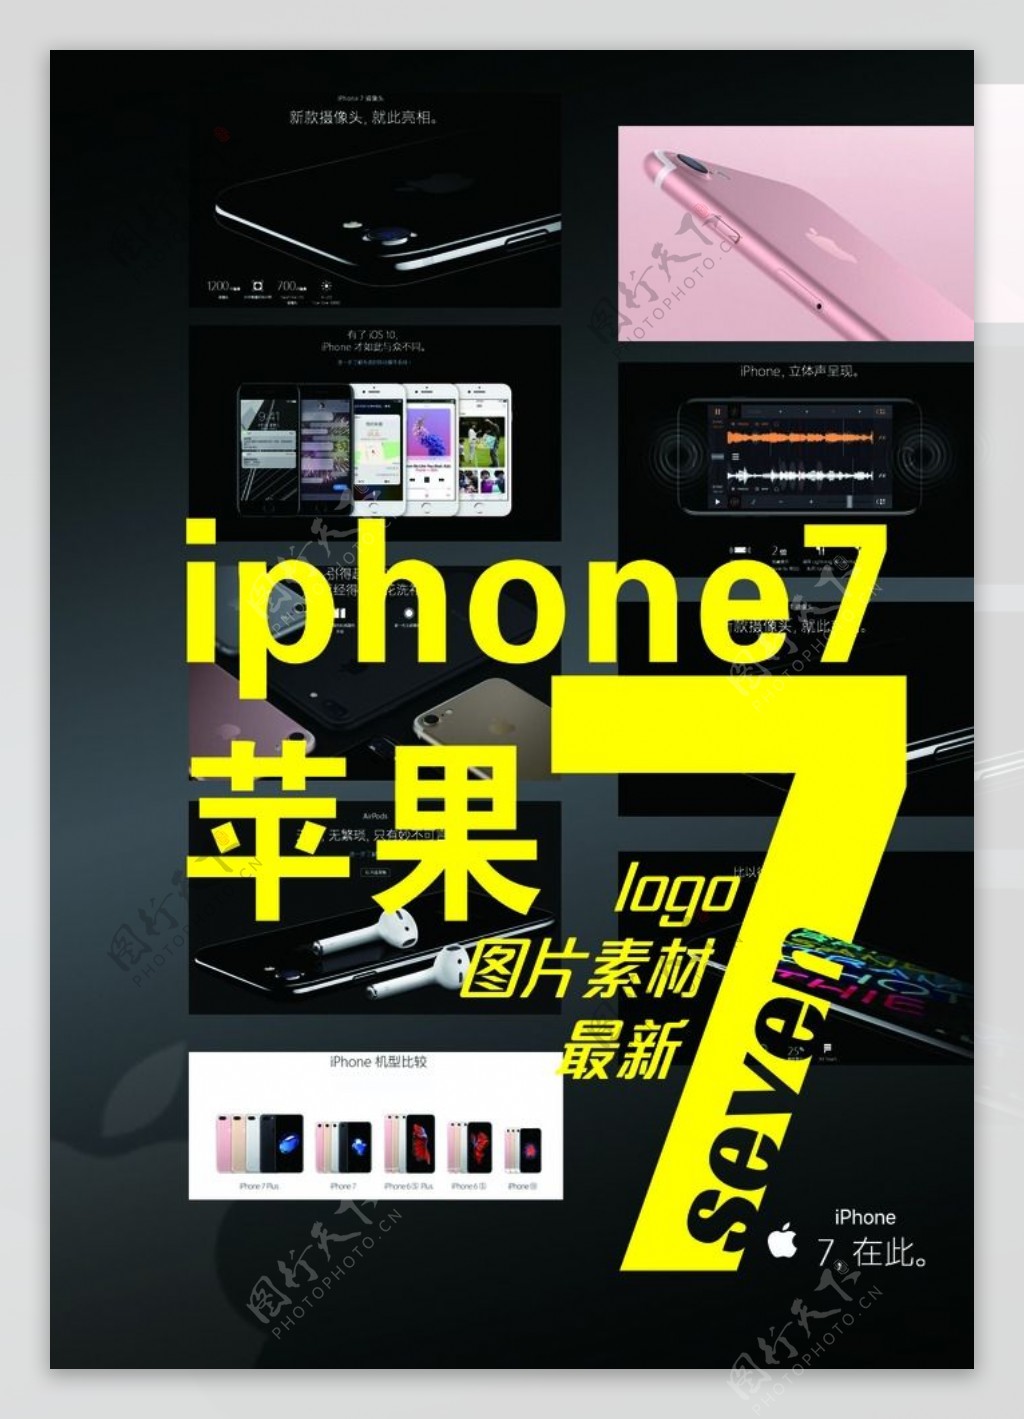 iphone7苹果手机